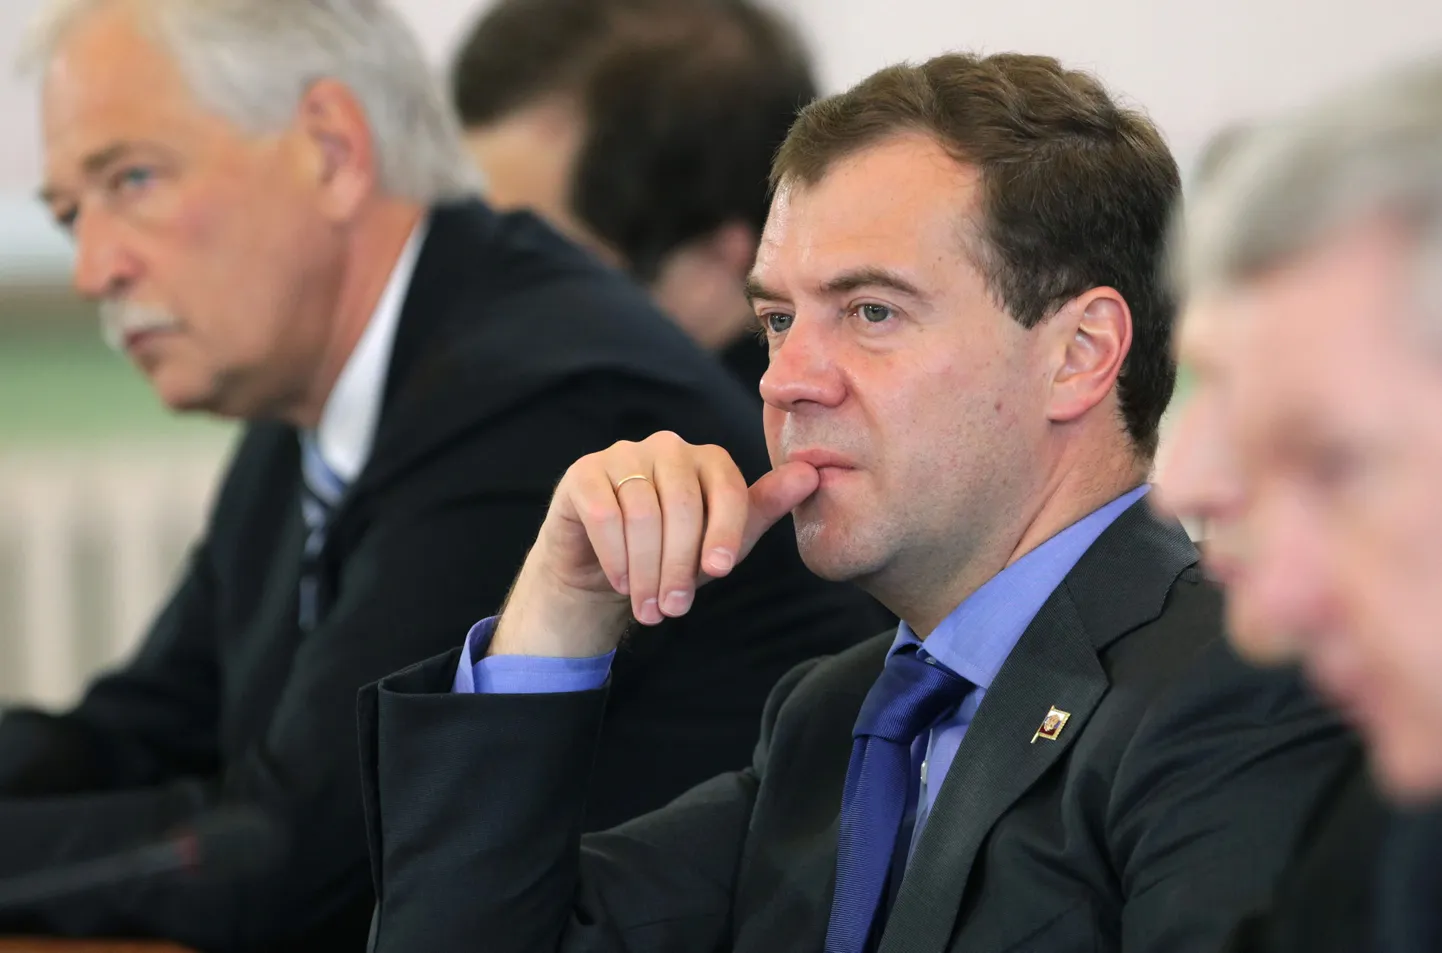 Форум пройдет под патронажем президента России Дмитрия Медведева.